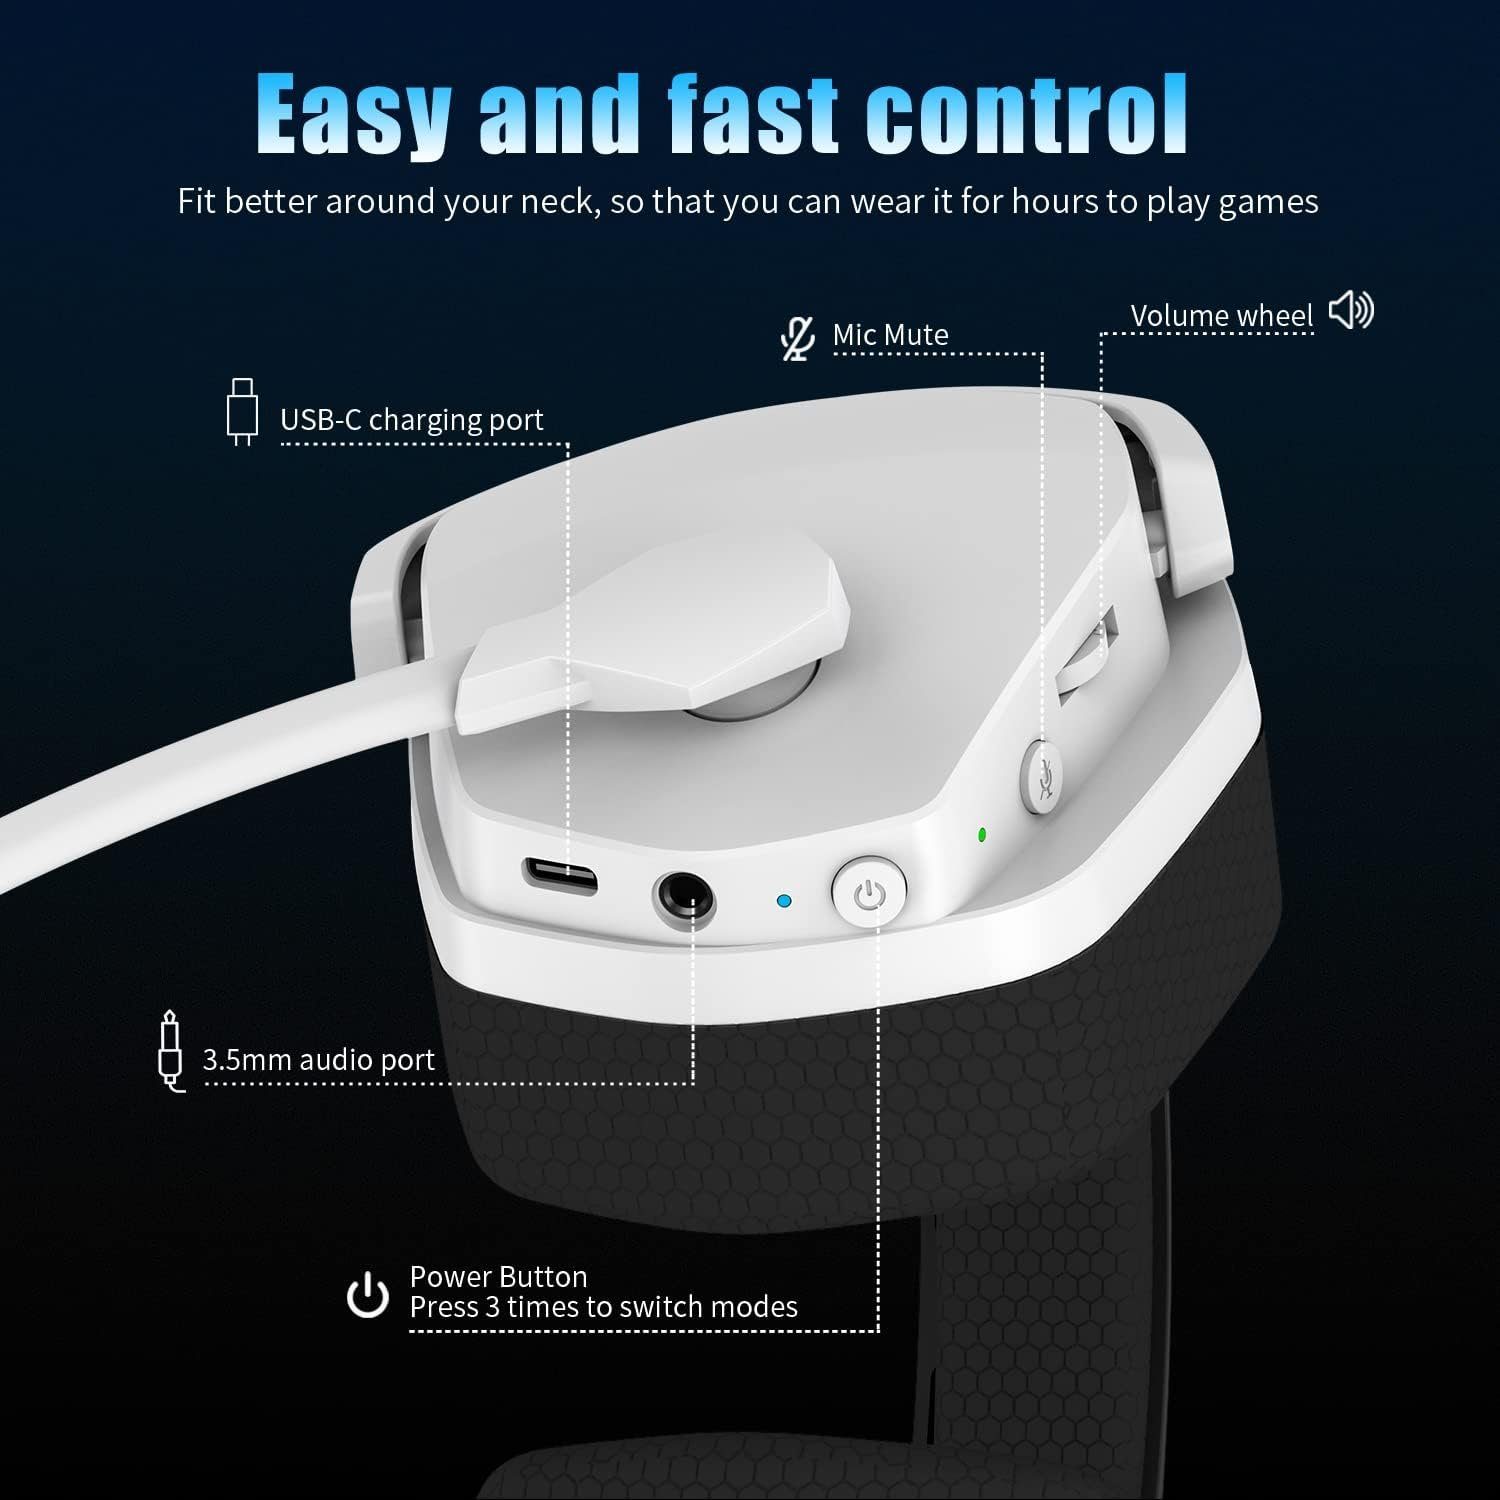 PS5 mit für Mikrofon, NUBWO 17+ (Rauschunterdrückung Stündige Gaming-Kopfhörer Mikrofon Ohr-Gaming-Kopfhörer Wireless-Nutzung über PS4 PC) Gaming-Headset